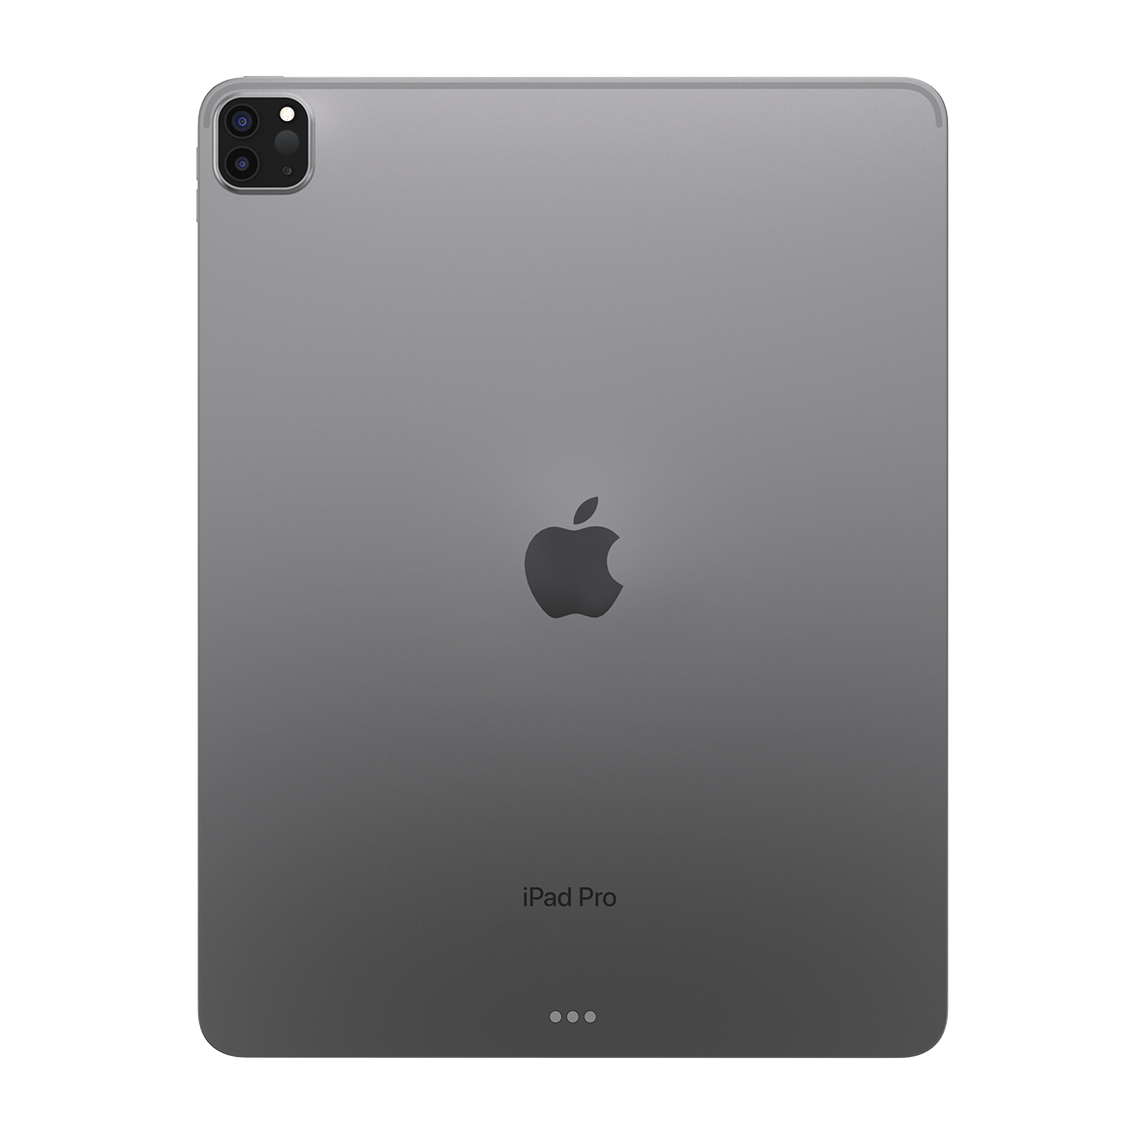 Apple iPad Pro 11-inch 3rd Generation - Space Gray - 256GB, Wi-Fi, Grade A